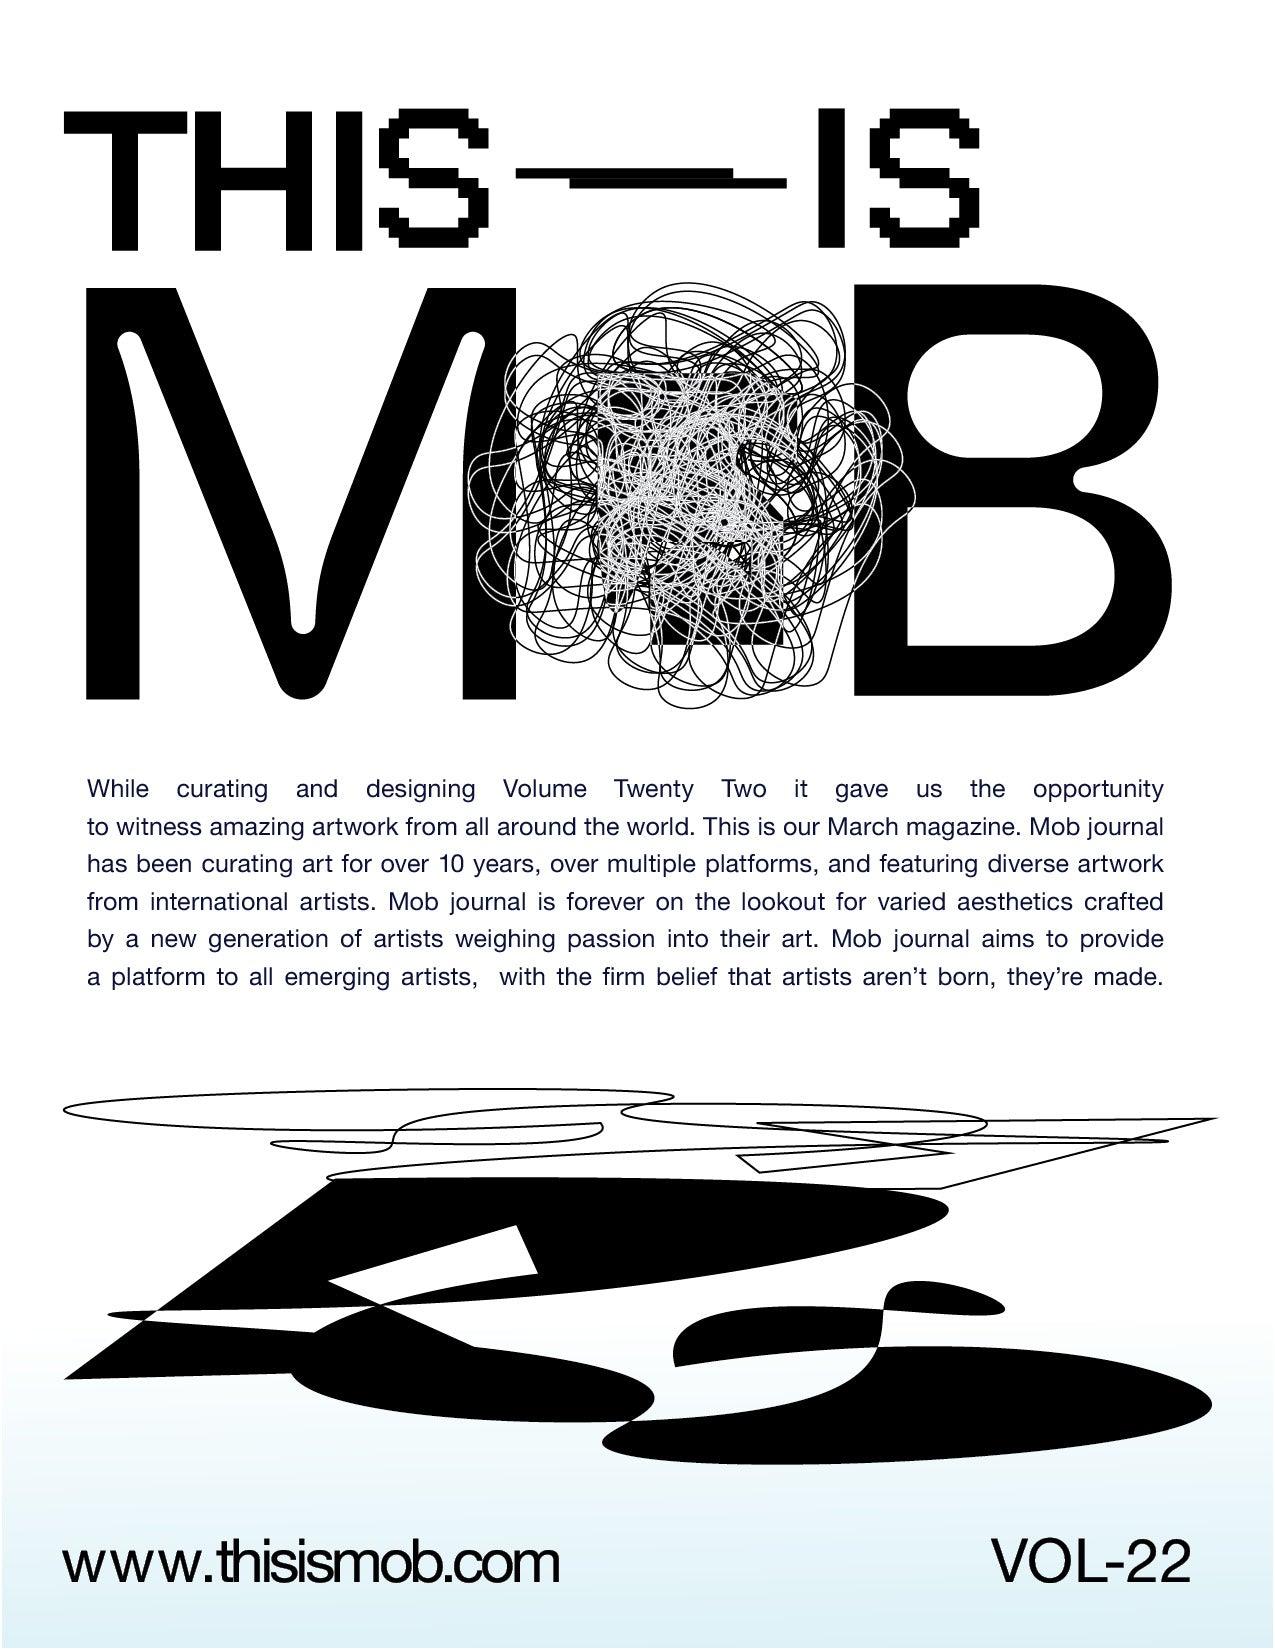 MOB JOURNAL | VOLUME TWENTY TWO | ISSUE #32 - Mob Journal